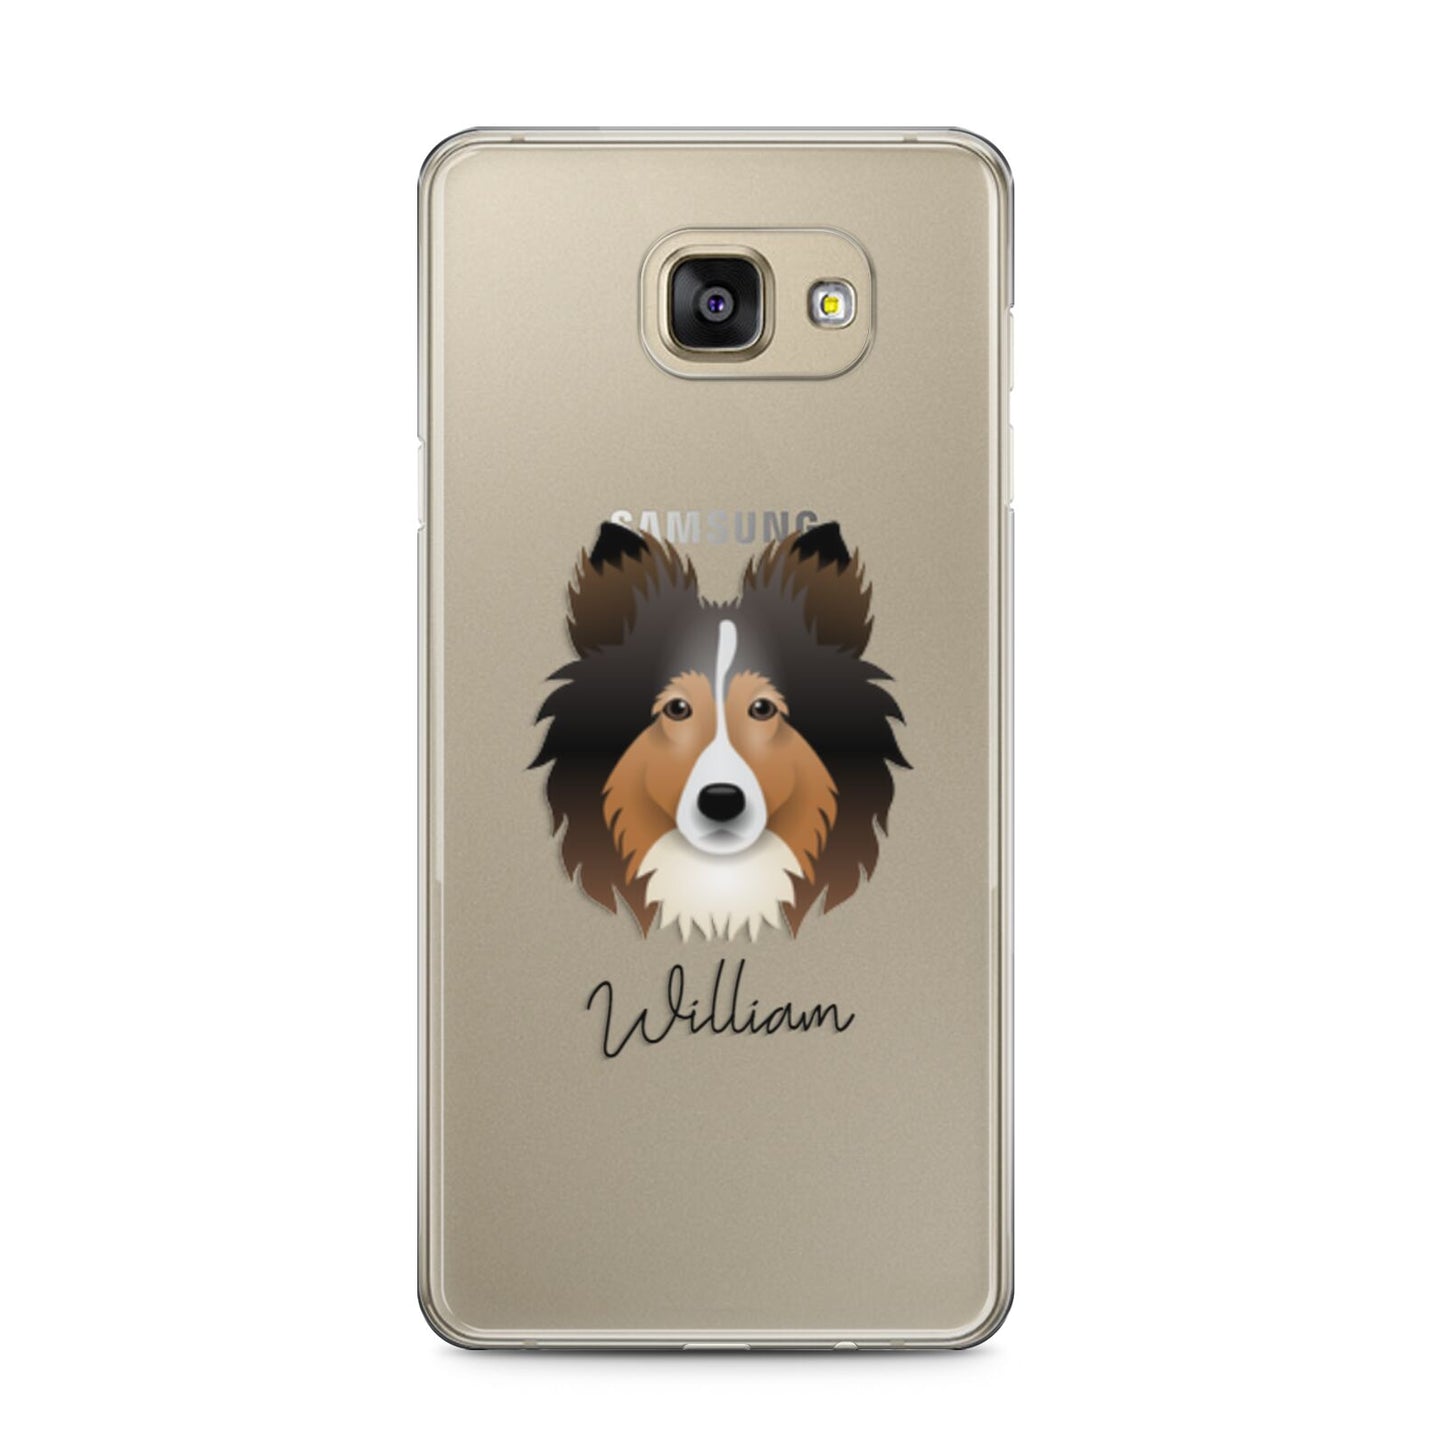 Shetland Sheepdog Personalised Samsung Galaxy A5 2016 Case on gold phone